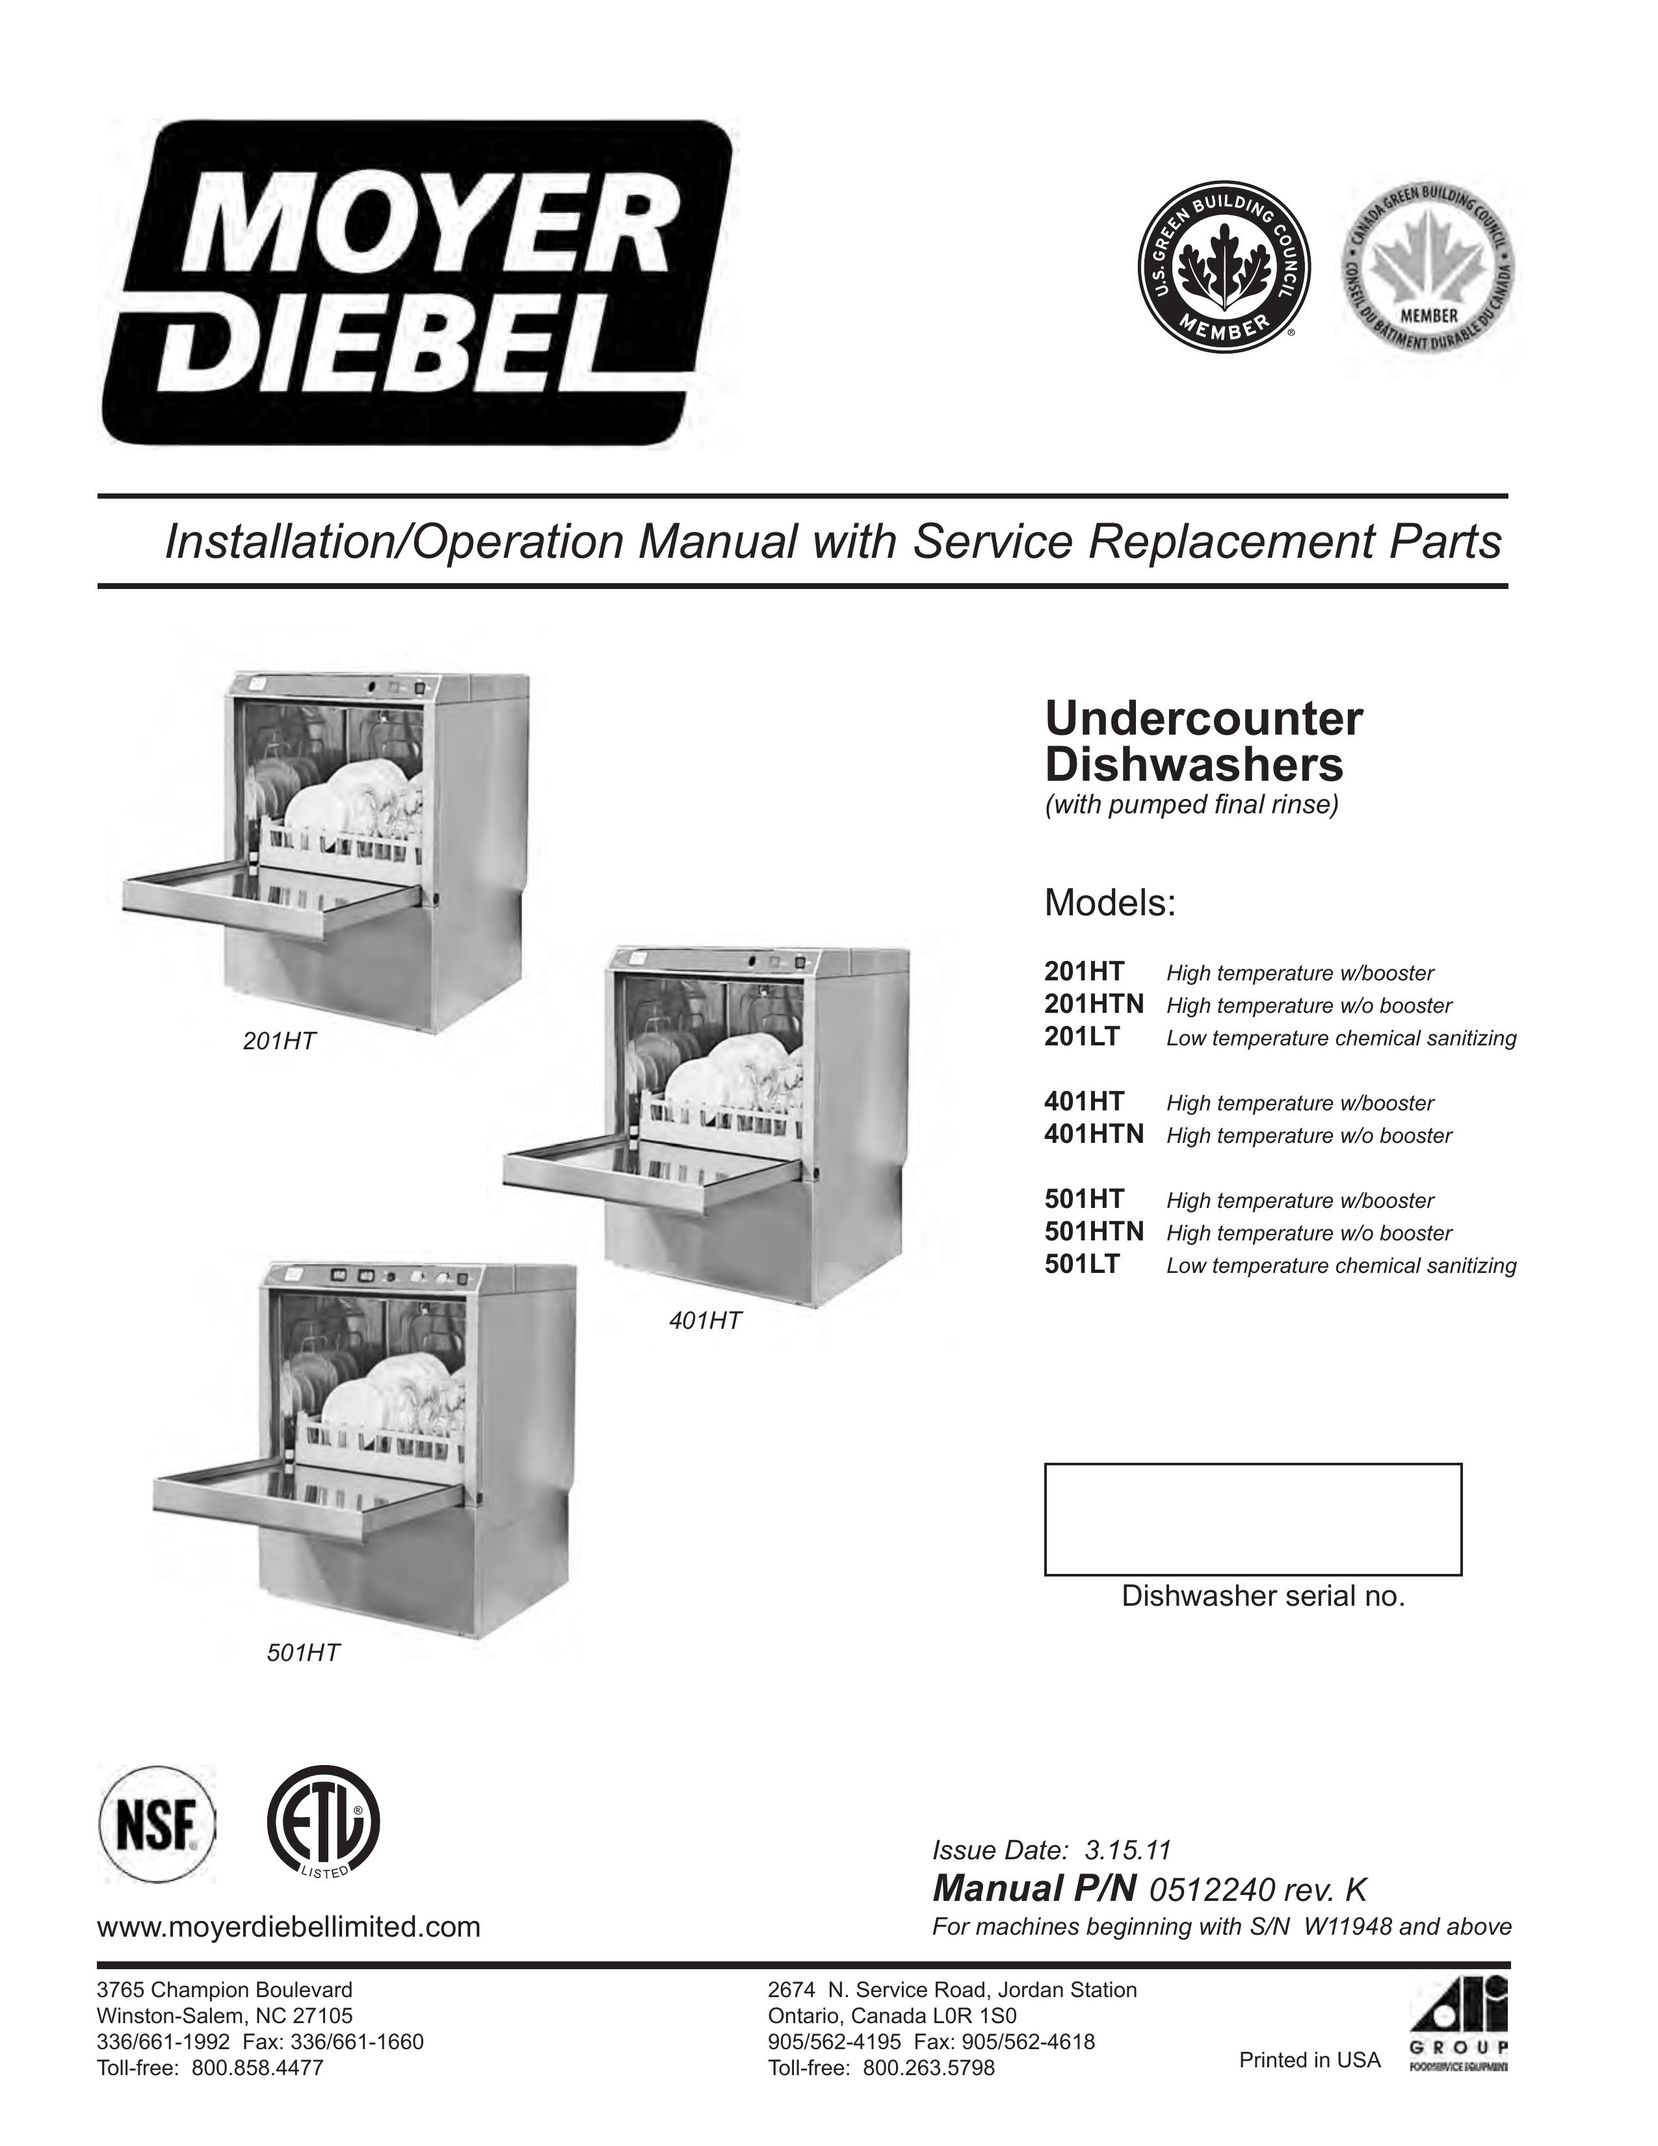 Moyer Diebel 201HT Dishwasher User Manual